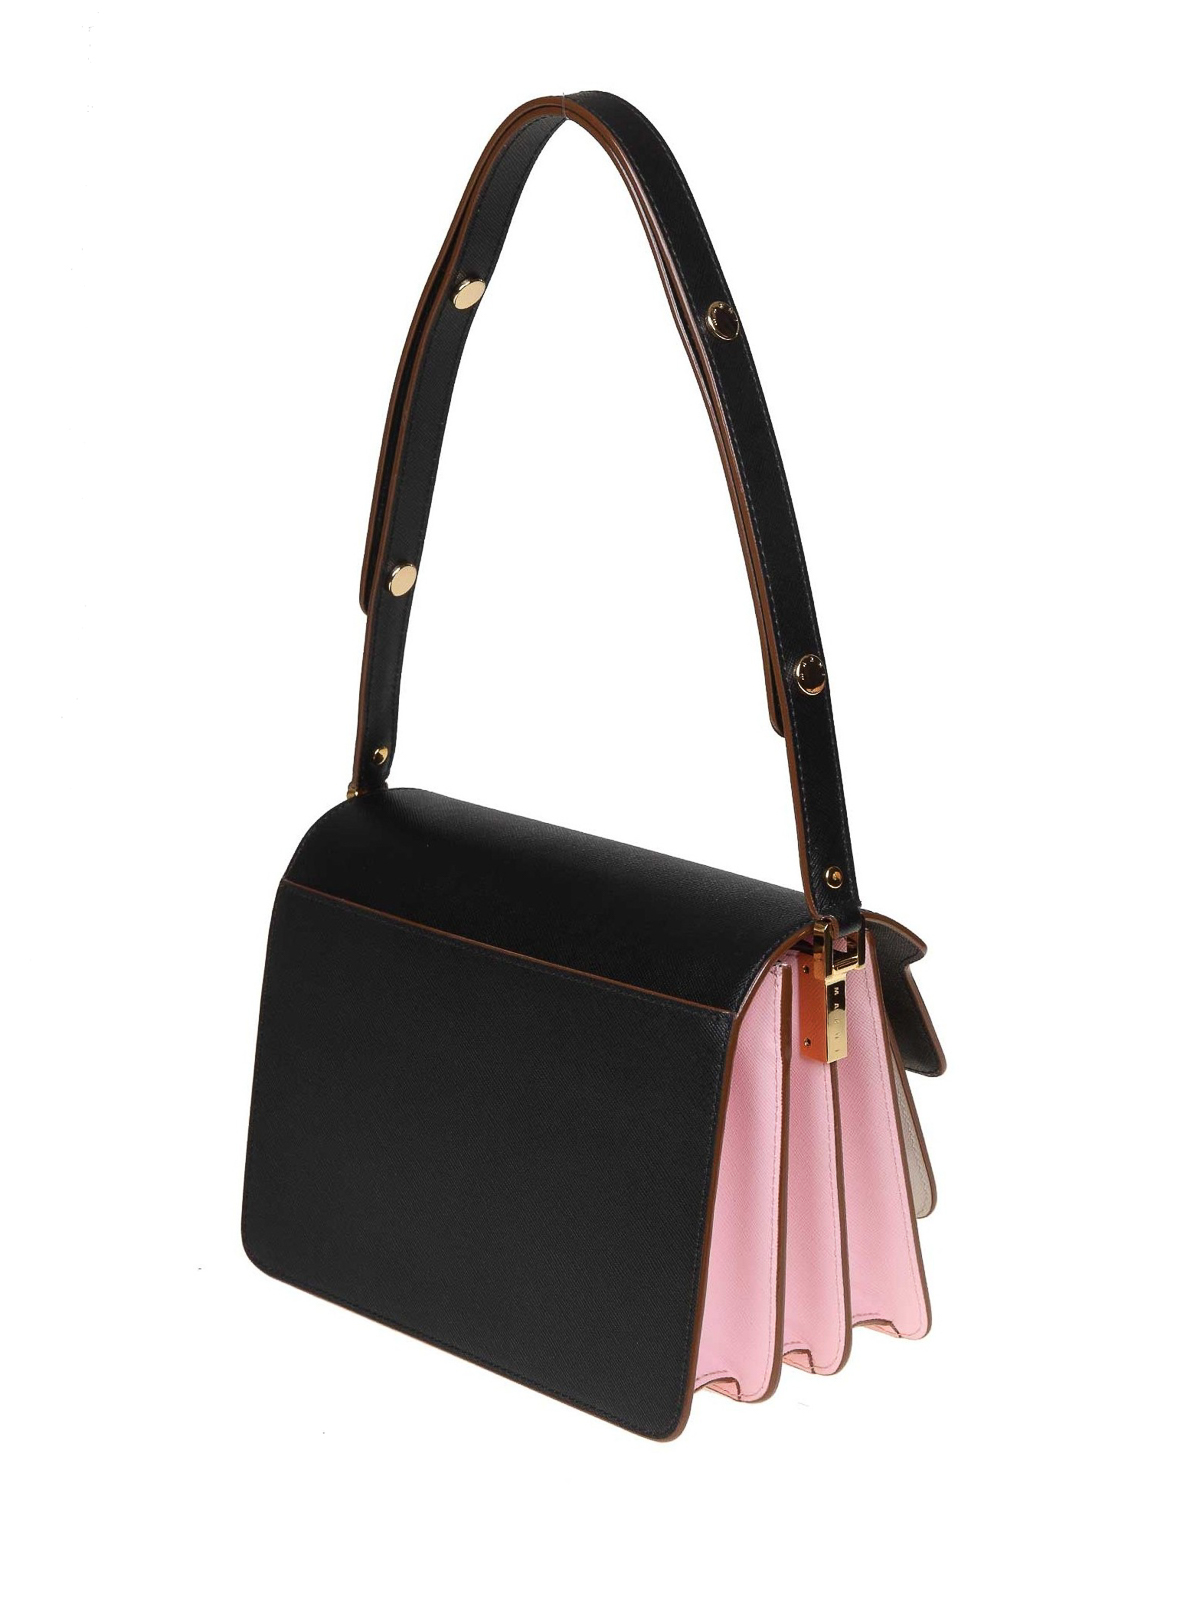 Marni Women's Medium Saffiano Leather Trunk Bag